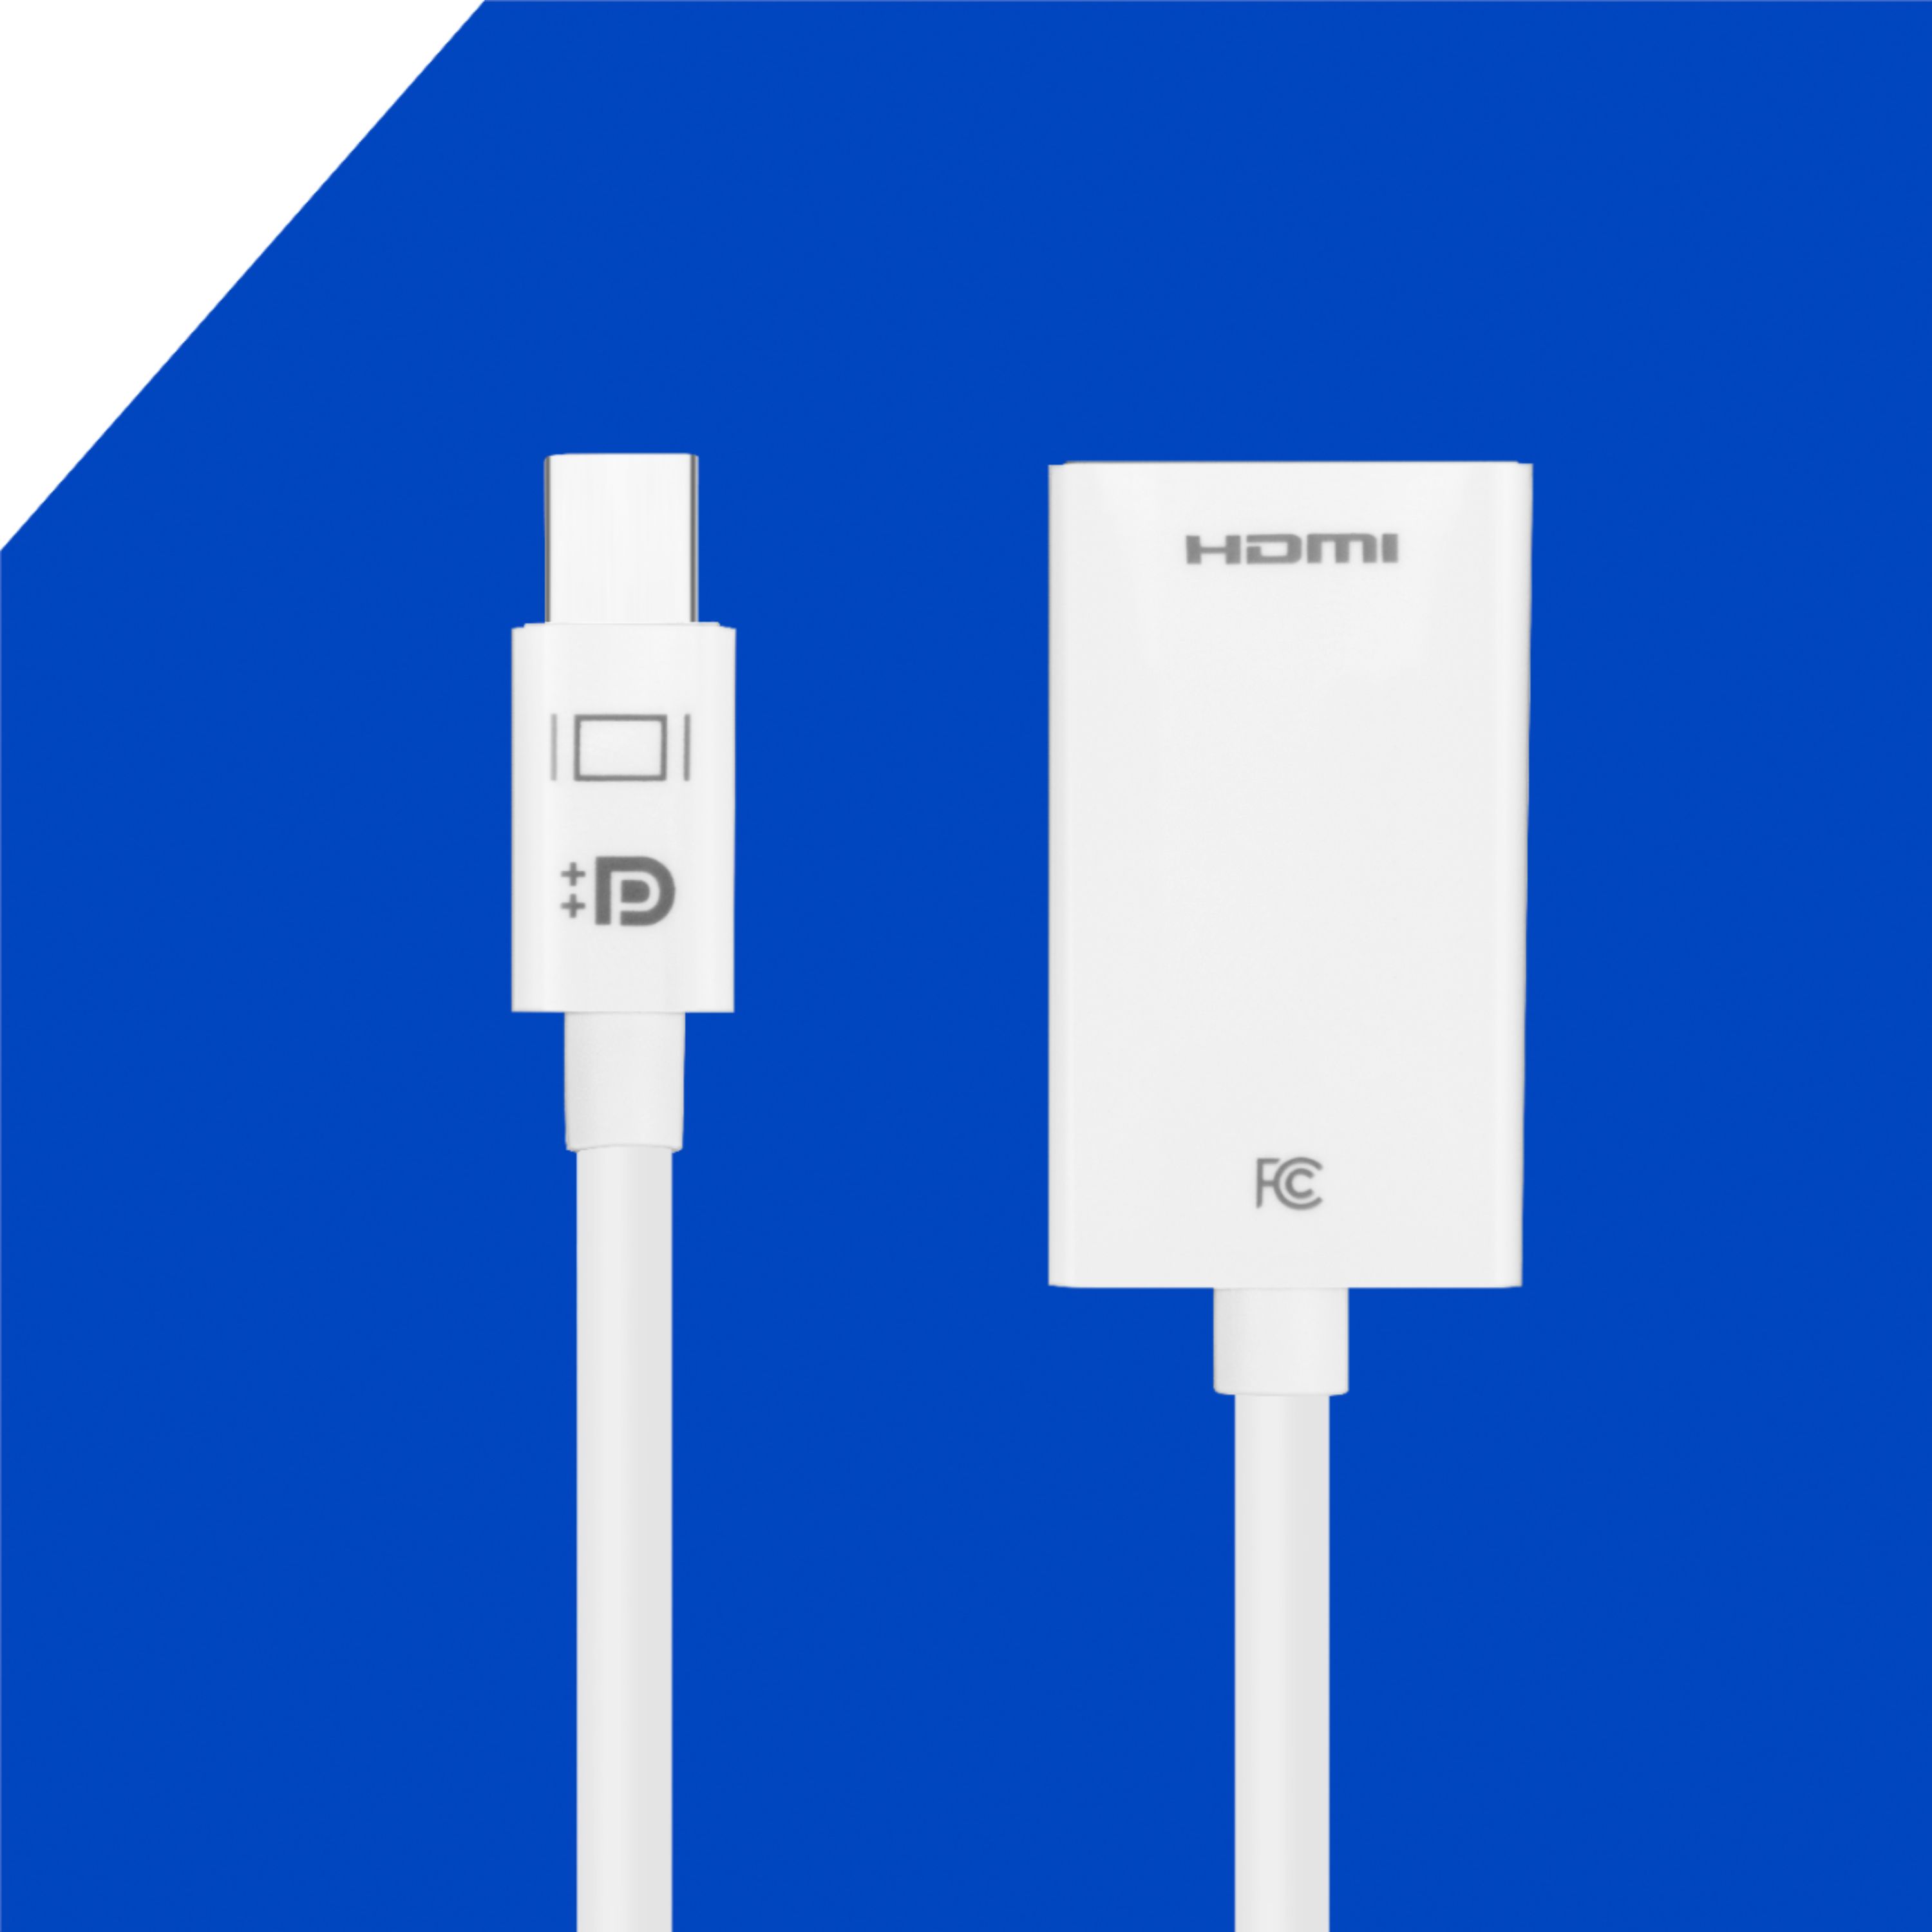   Basics Mini DisplayPort to HDMI Adapter : Electronics